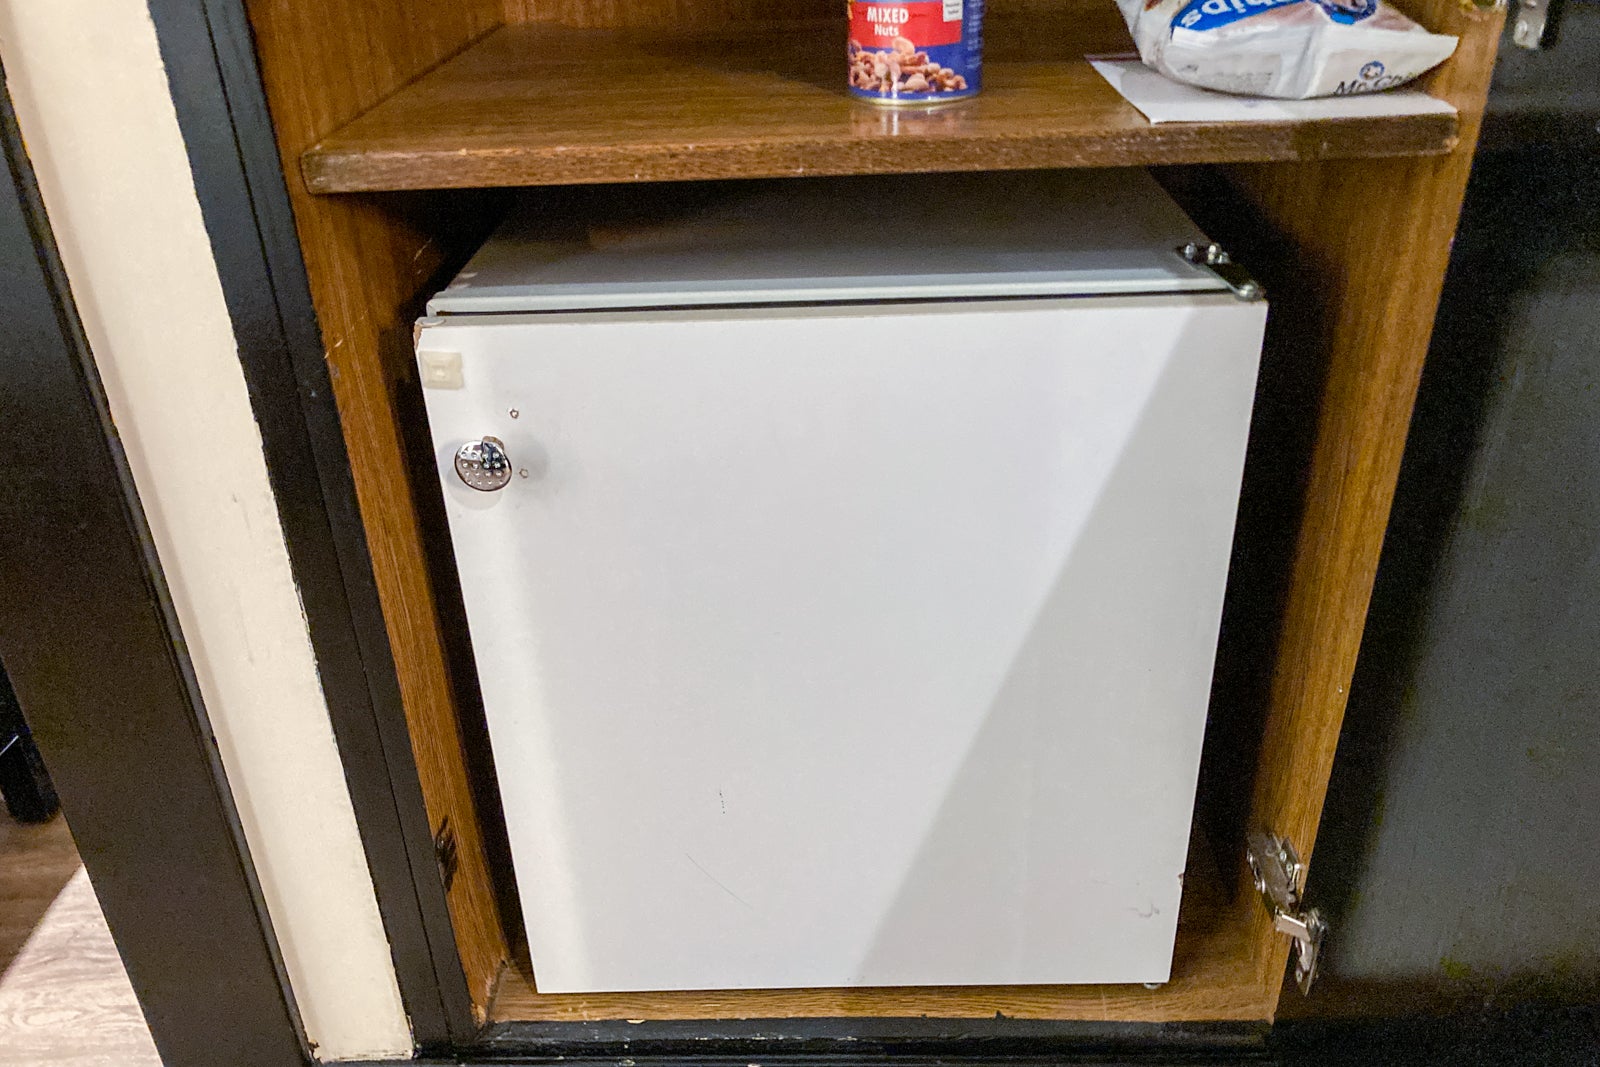 a mini fridge, which is closed